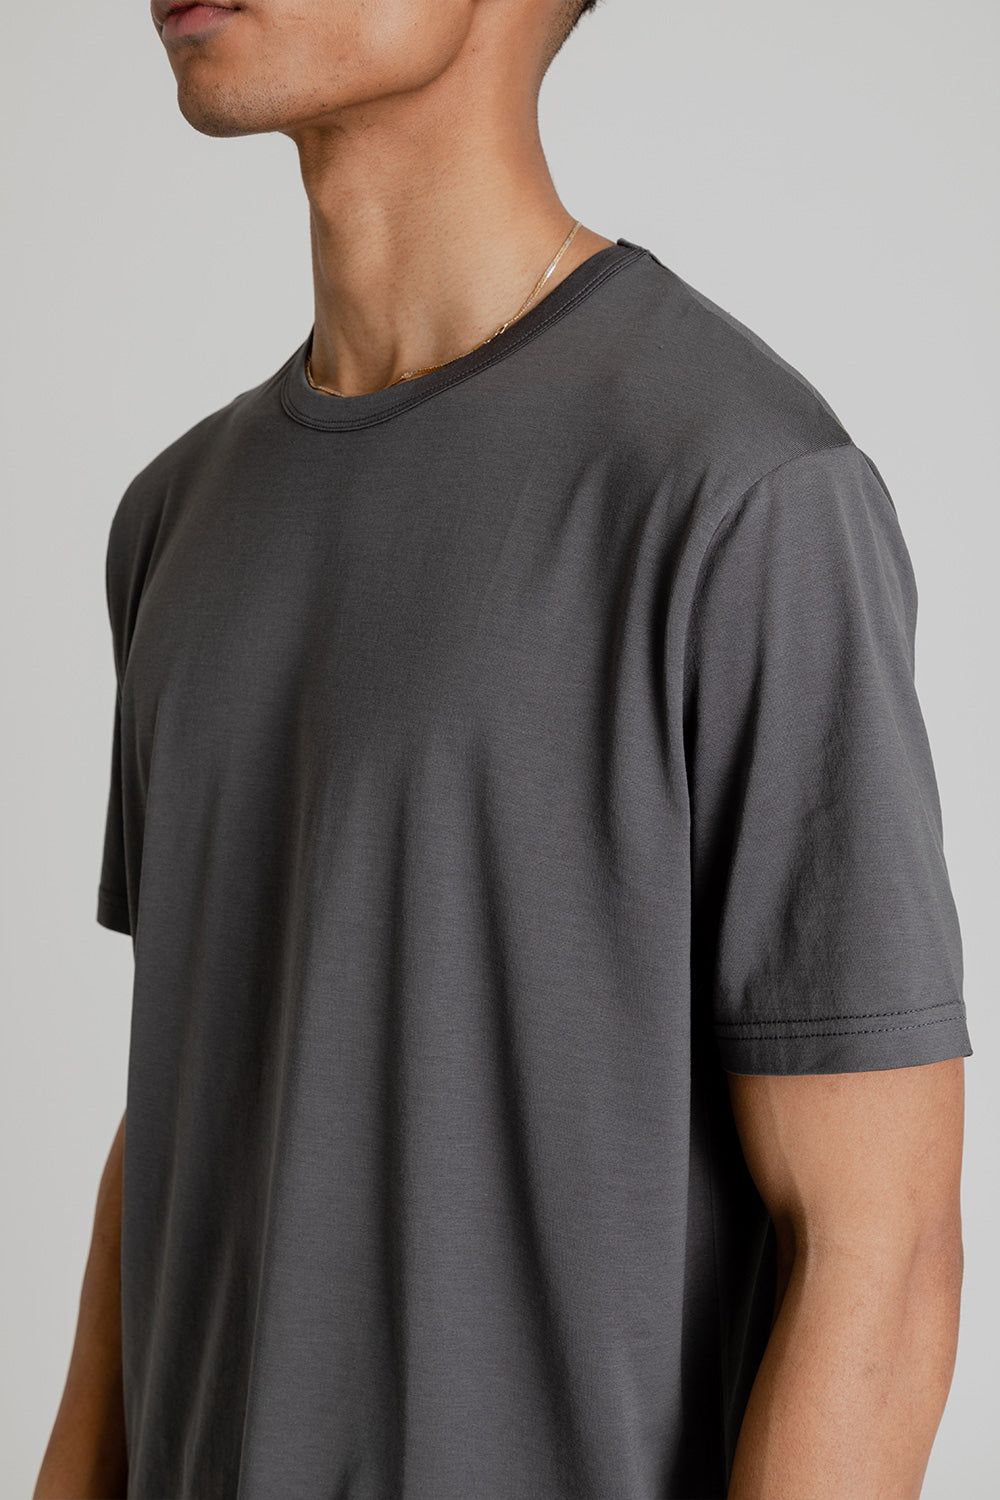 Sunspel Classic T-Shirt in Charcoal